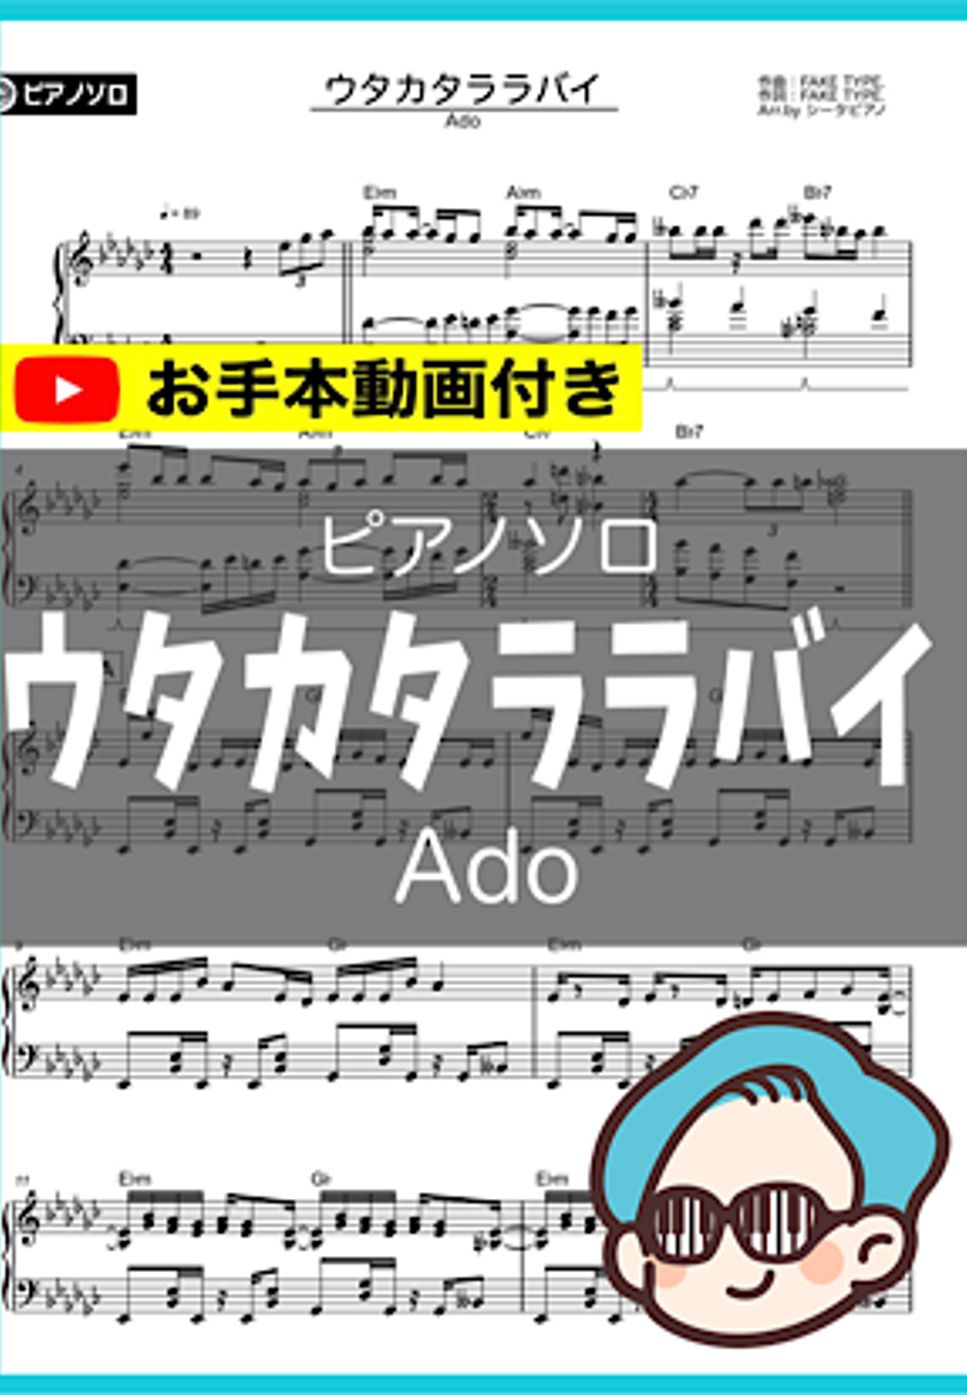 Ado - ウタカタララバイ by シータピアノ